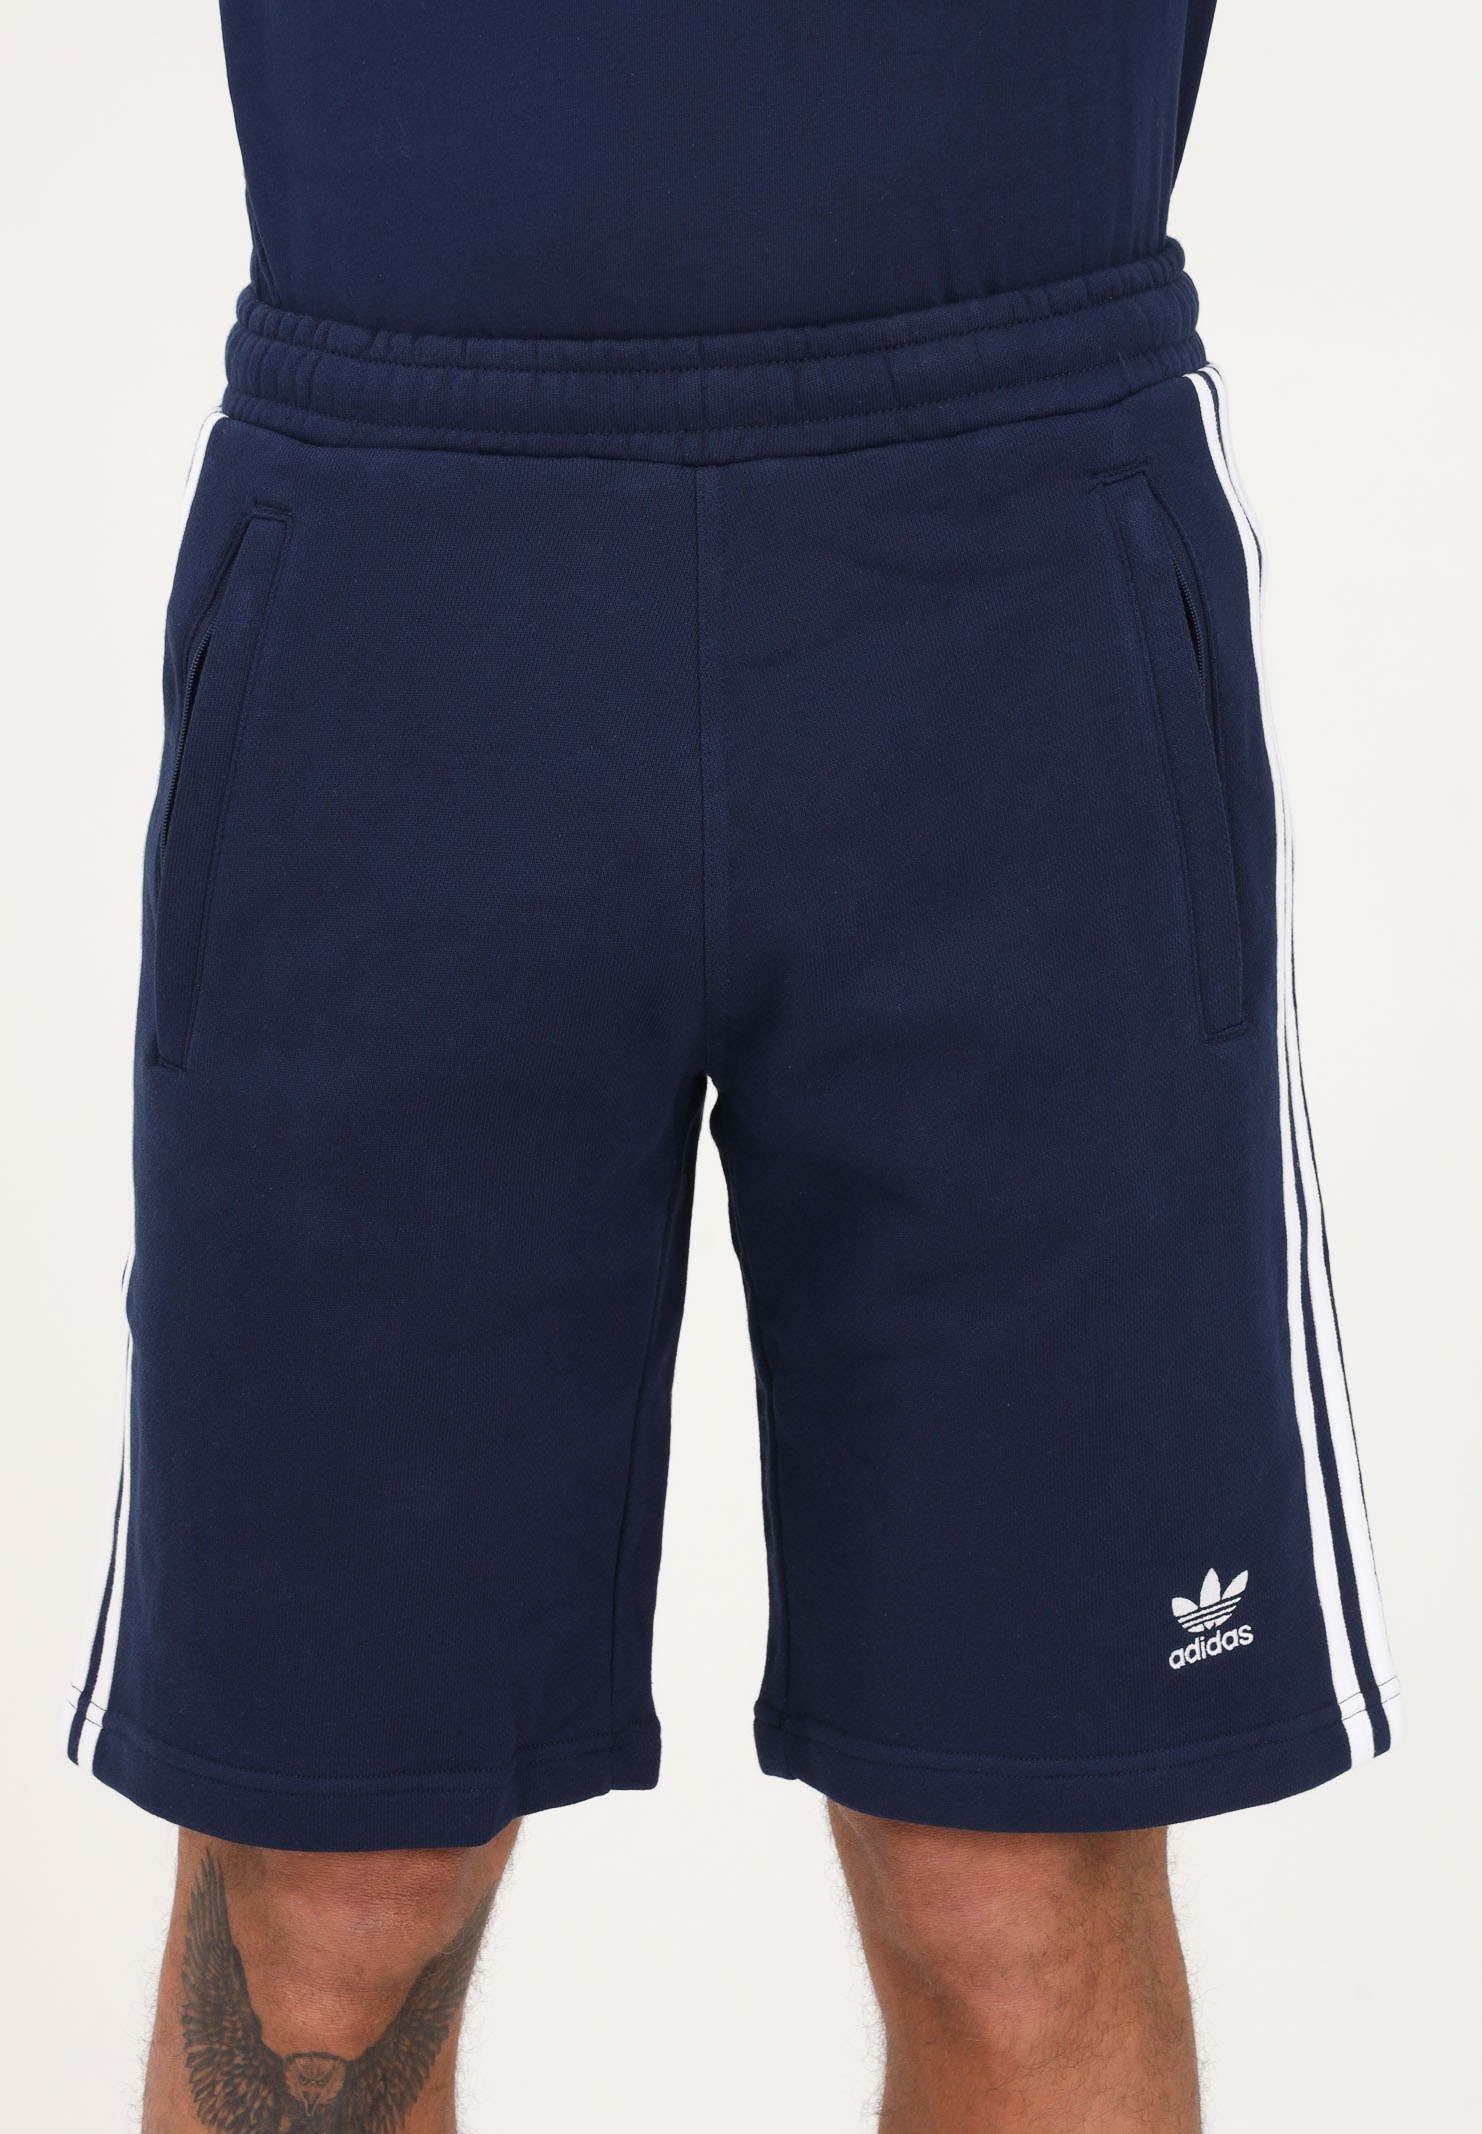 Adicolor Classic 3-Stripes blue men's sports shorts - ADIDAS - Pavidas